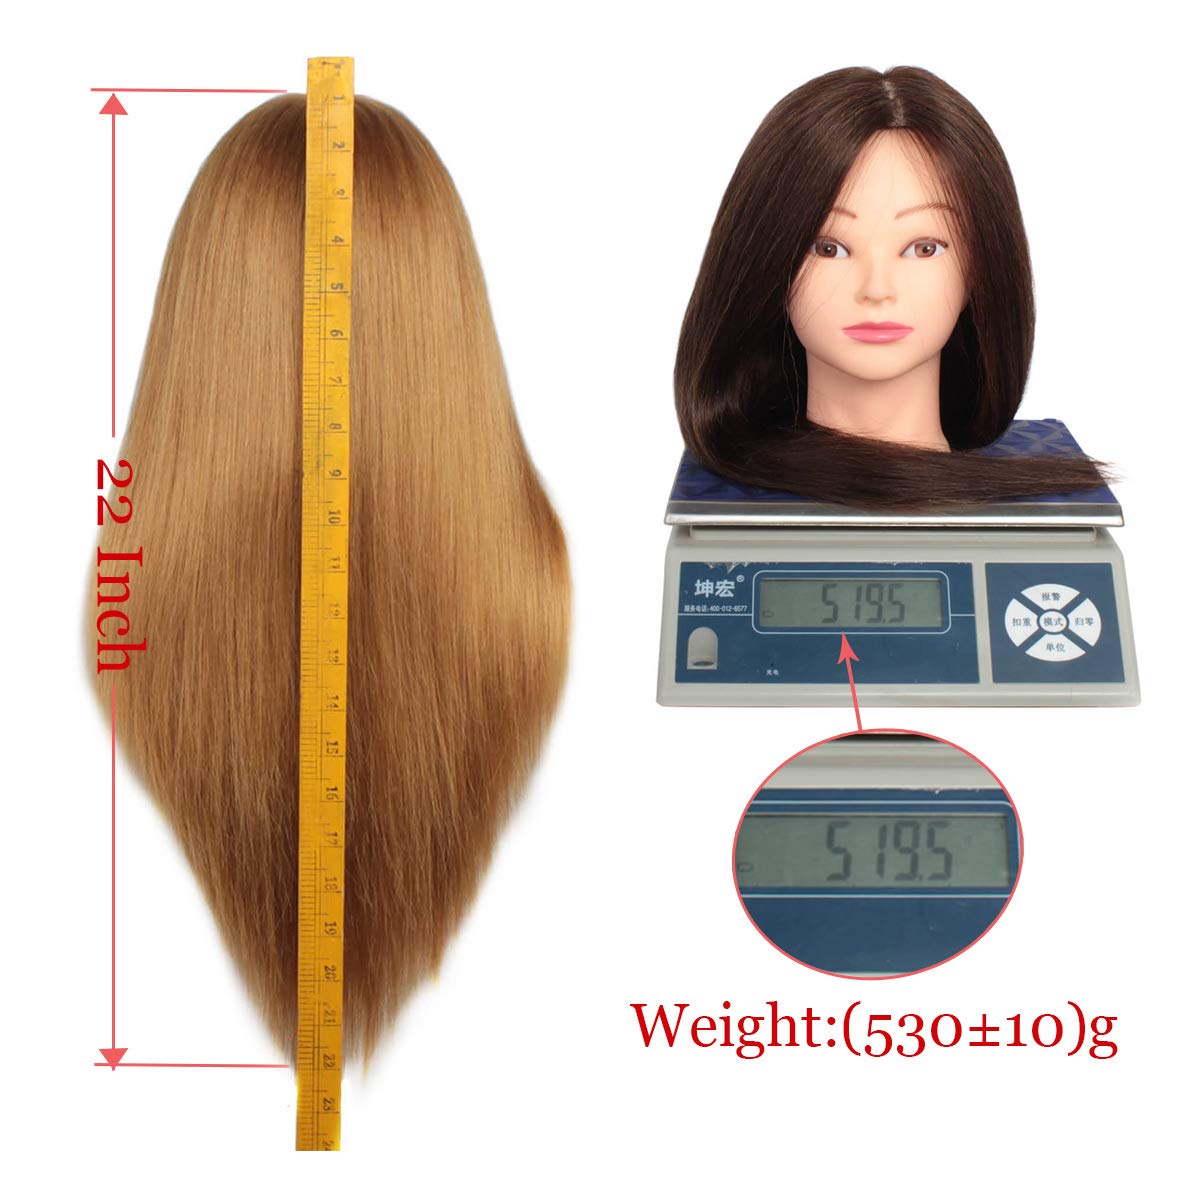 20 inch 60% Human Hair Training Practice Head Styling Dye Cutting Mannequin Manikin Head with Free Clamp Holder Brown Hair Doll Head